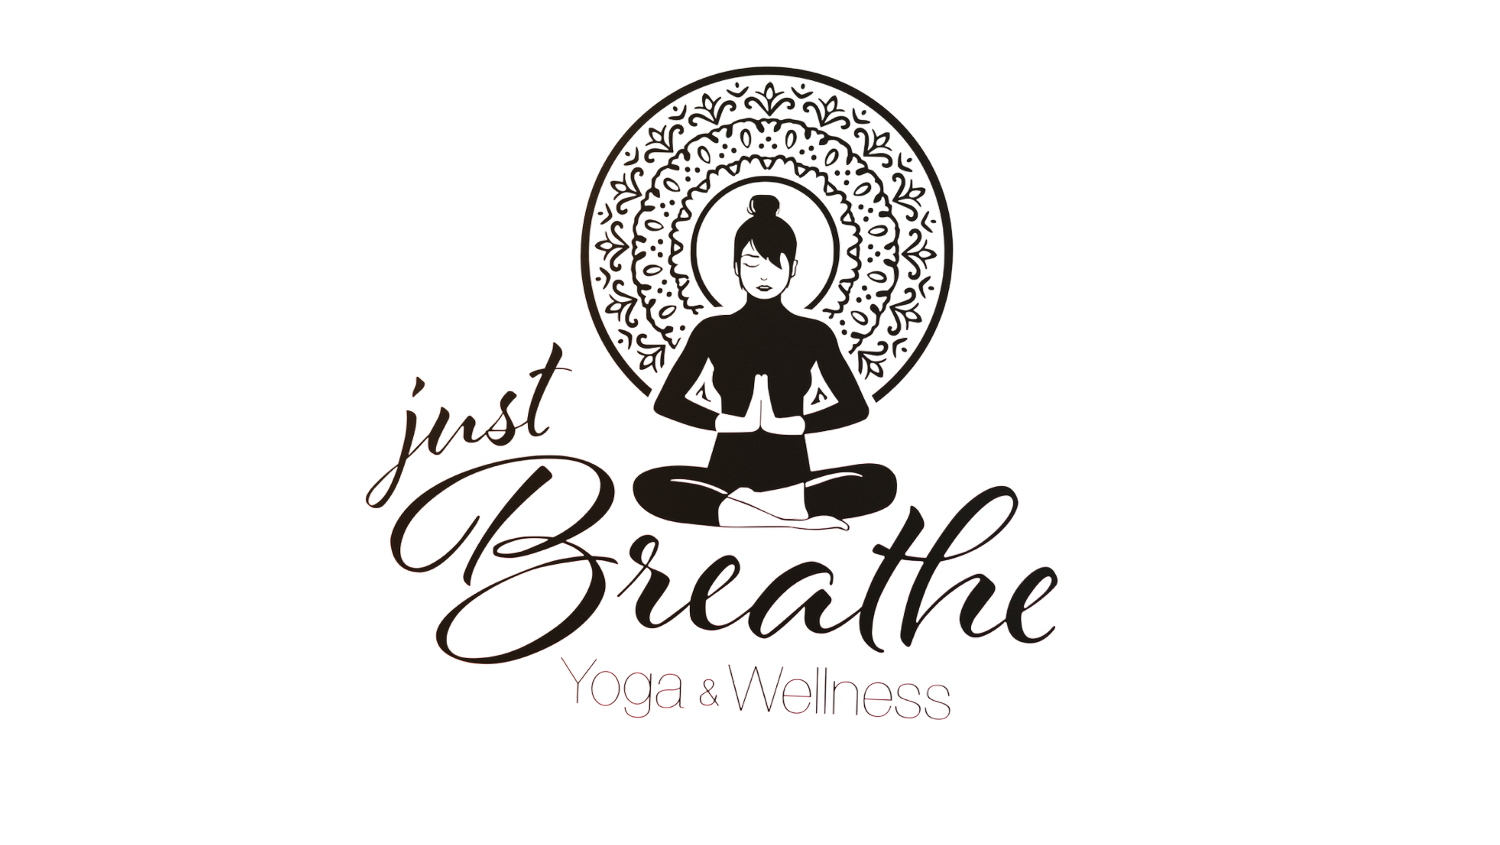 Just Breathe Yoga and Wellness Studio